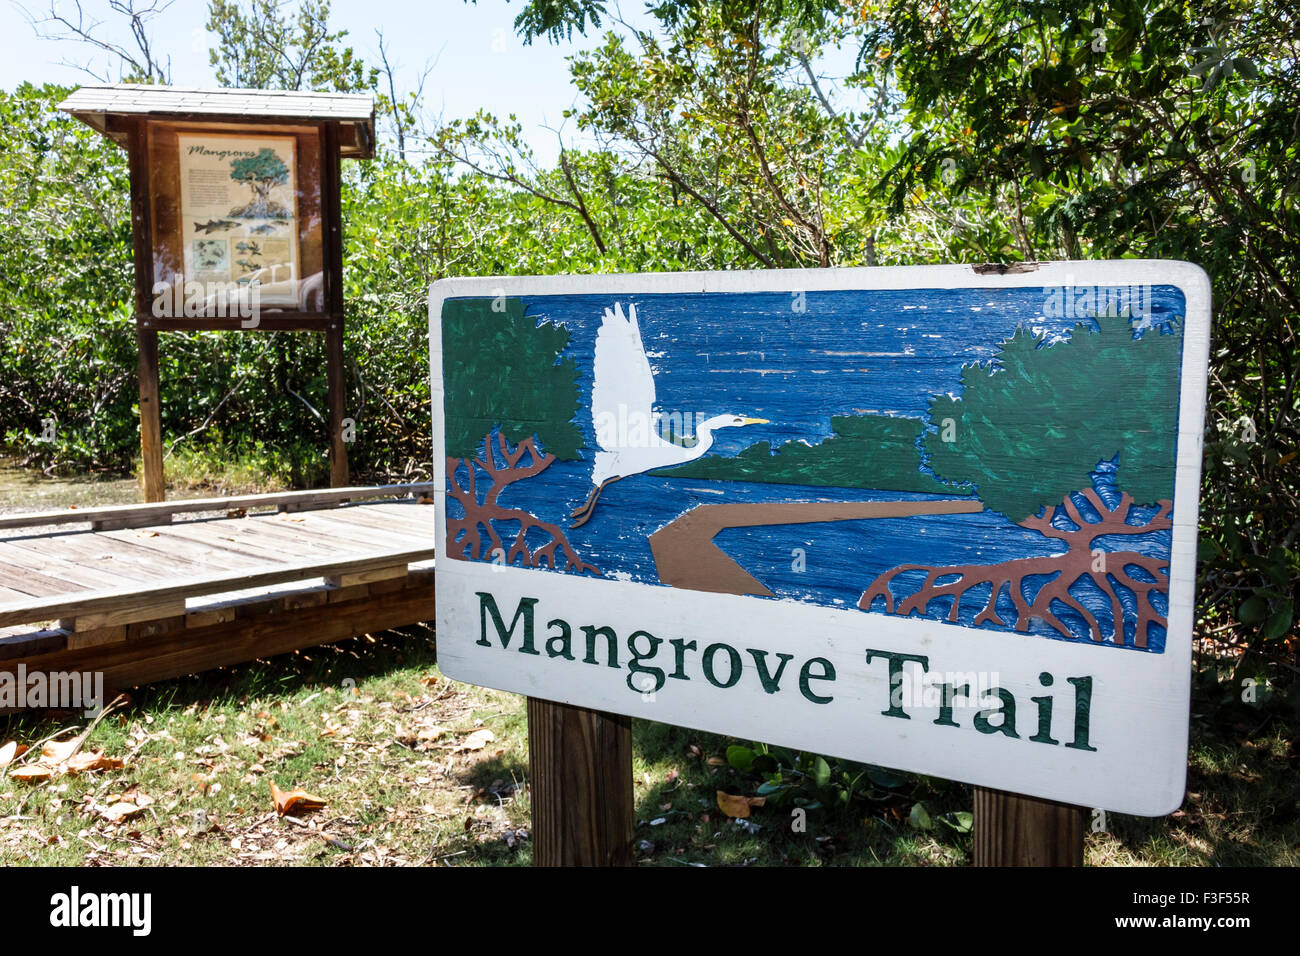 Key Largo Florida Keys,John Pennekamp Coral Reef State Park,Mangrove Trail,sign,raised nature boardwalk,FL150508017 Stock Photo